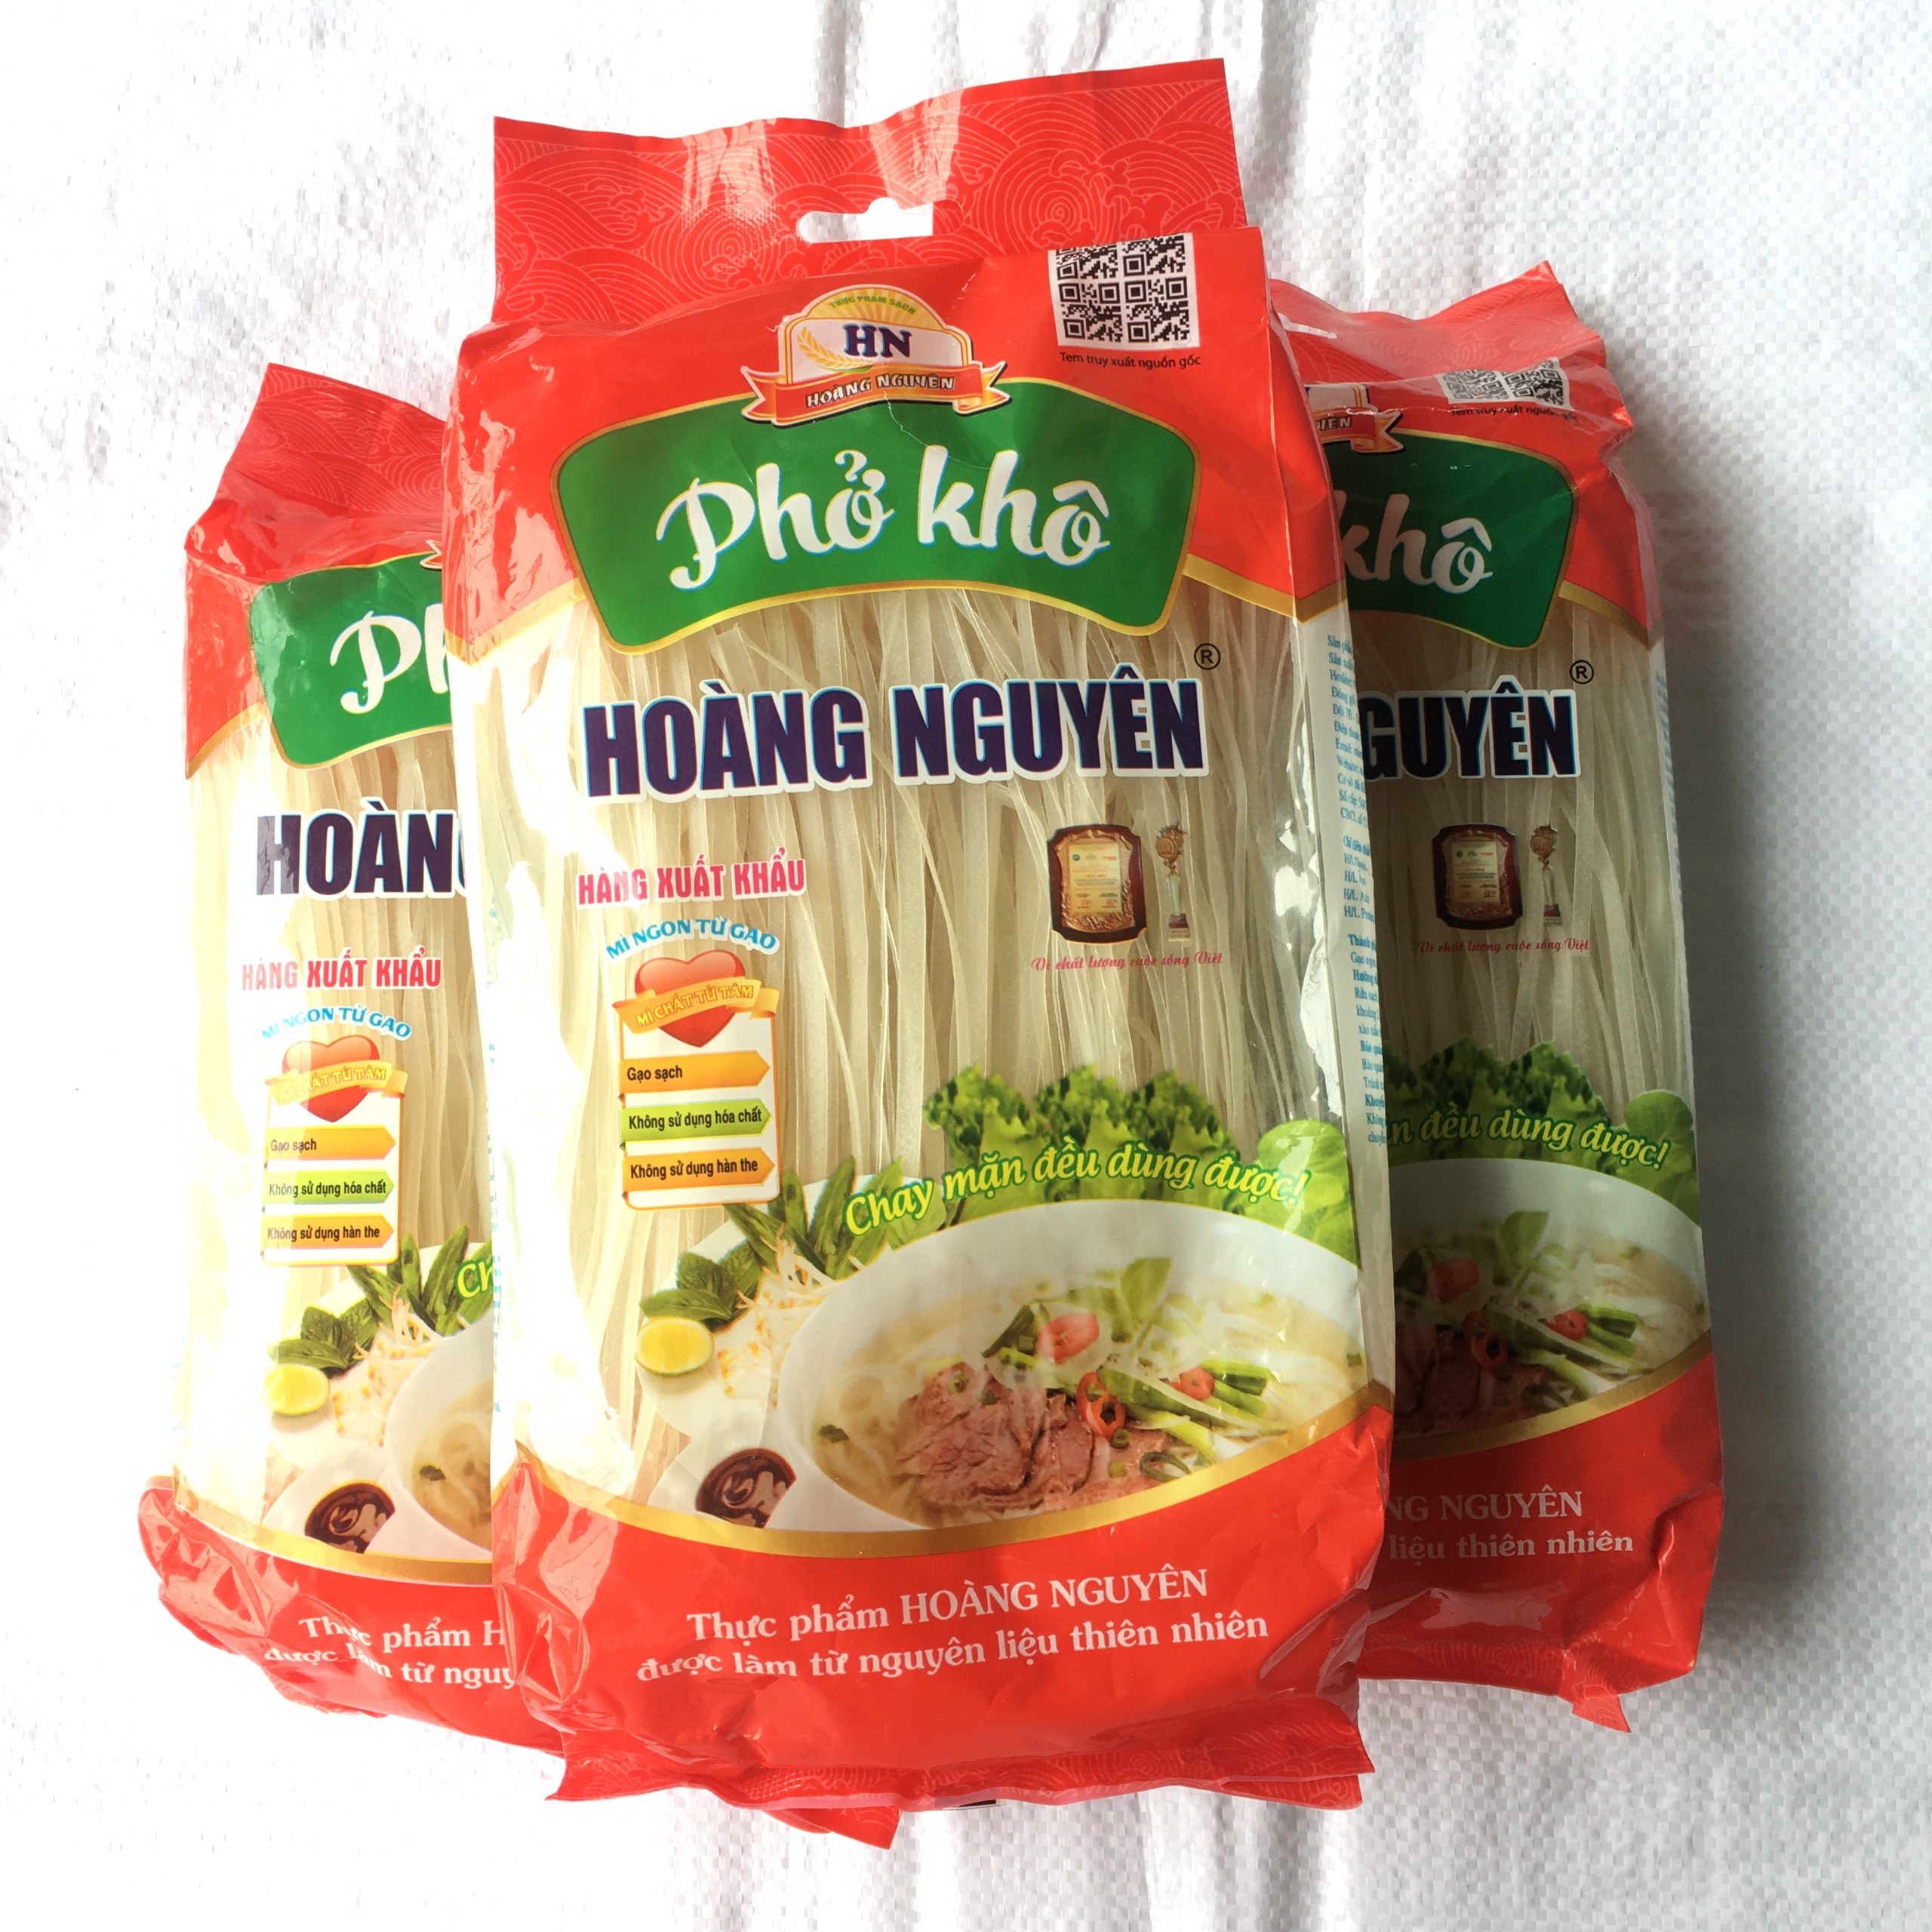 Dried Flat Noodles Flat Rice Noodles Rice Vermicelli Noodles Hot Deal Customized Service Food OCOP Bag Vietnam Origin